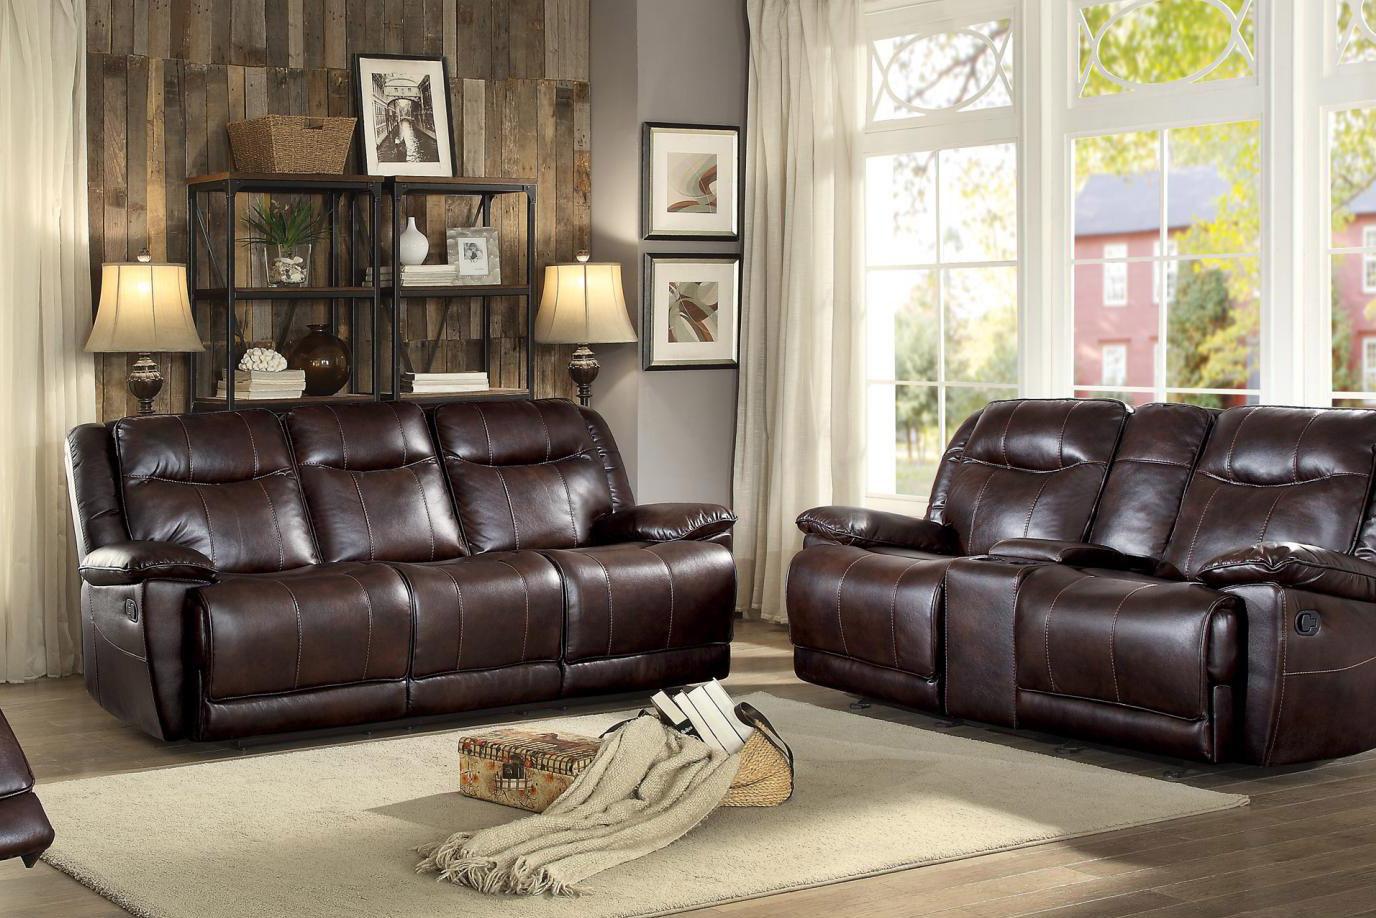 Contemporary, Modern Recliner Sofa Set Wasola 8414DBR-3+2-Wasola in Dark Brown Faux Leather